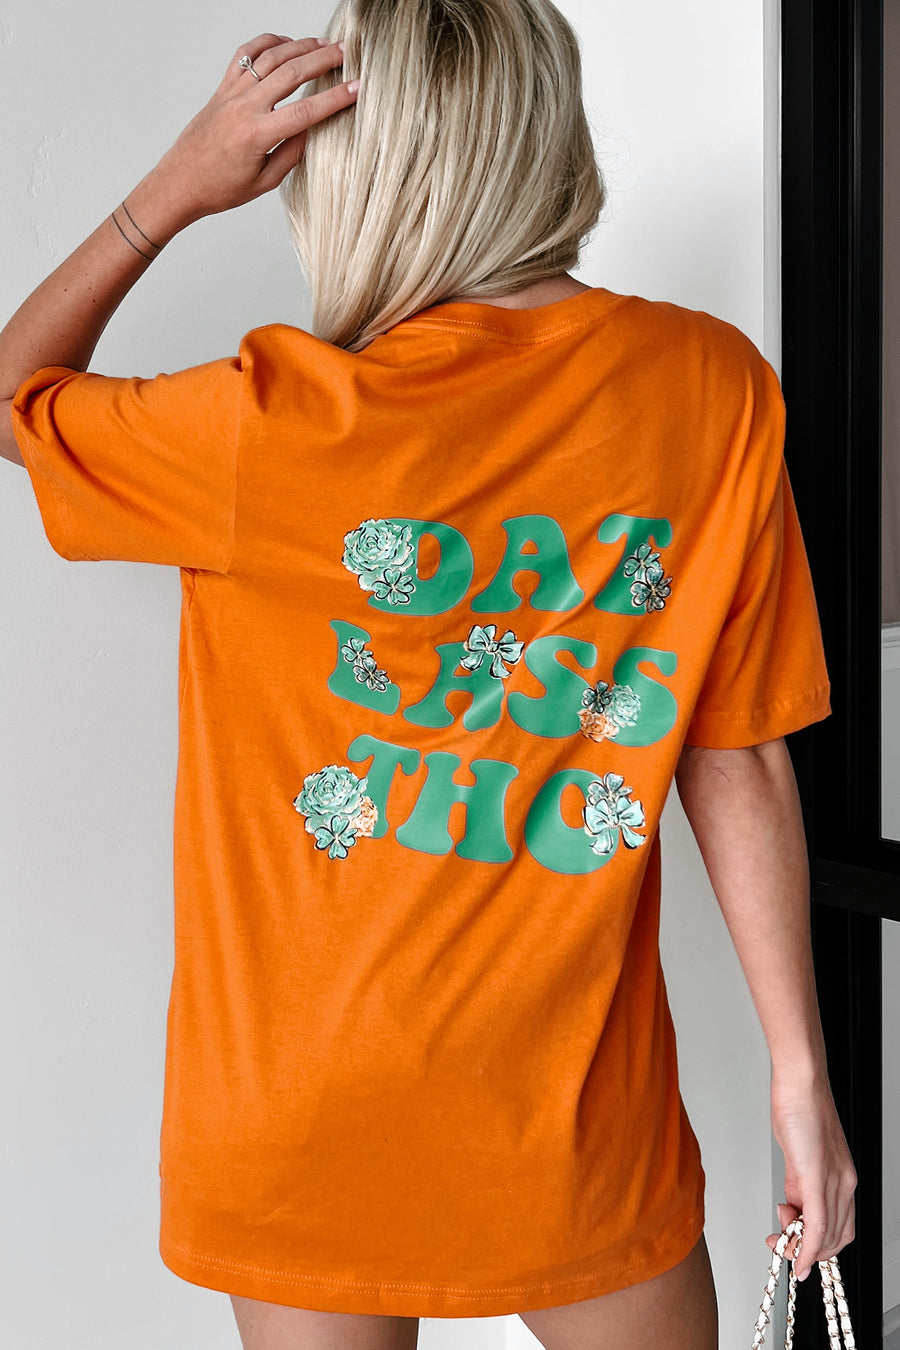 "Dat Lass Tho" Double-Sided Graphic T-Shirt (Orange) - Print On Demand - NanaMacs